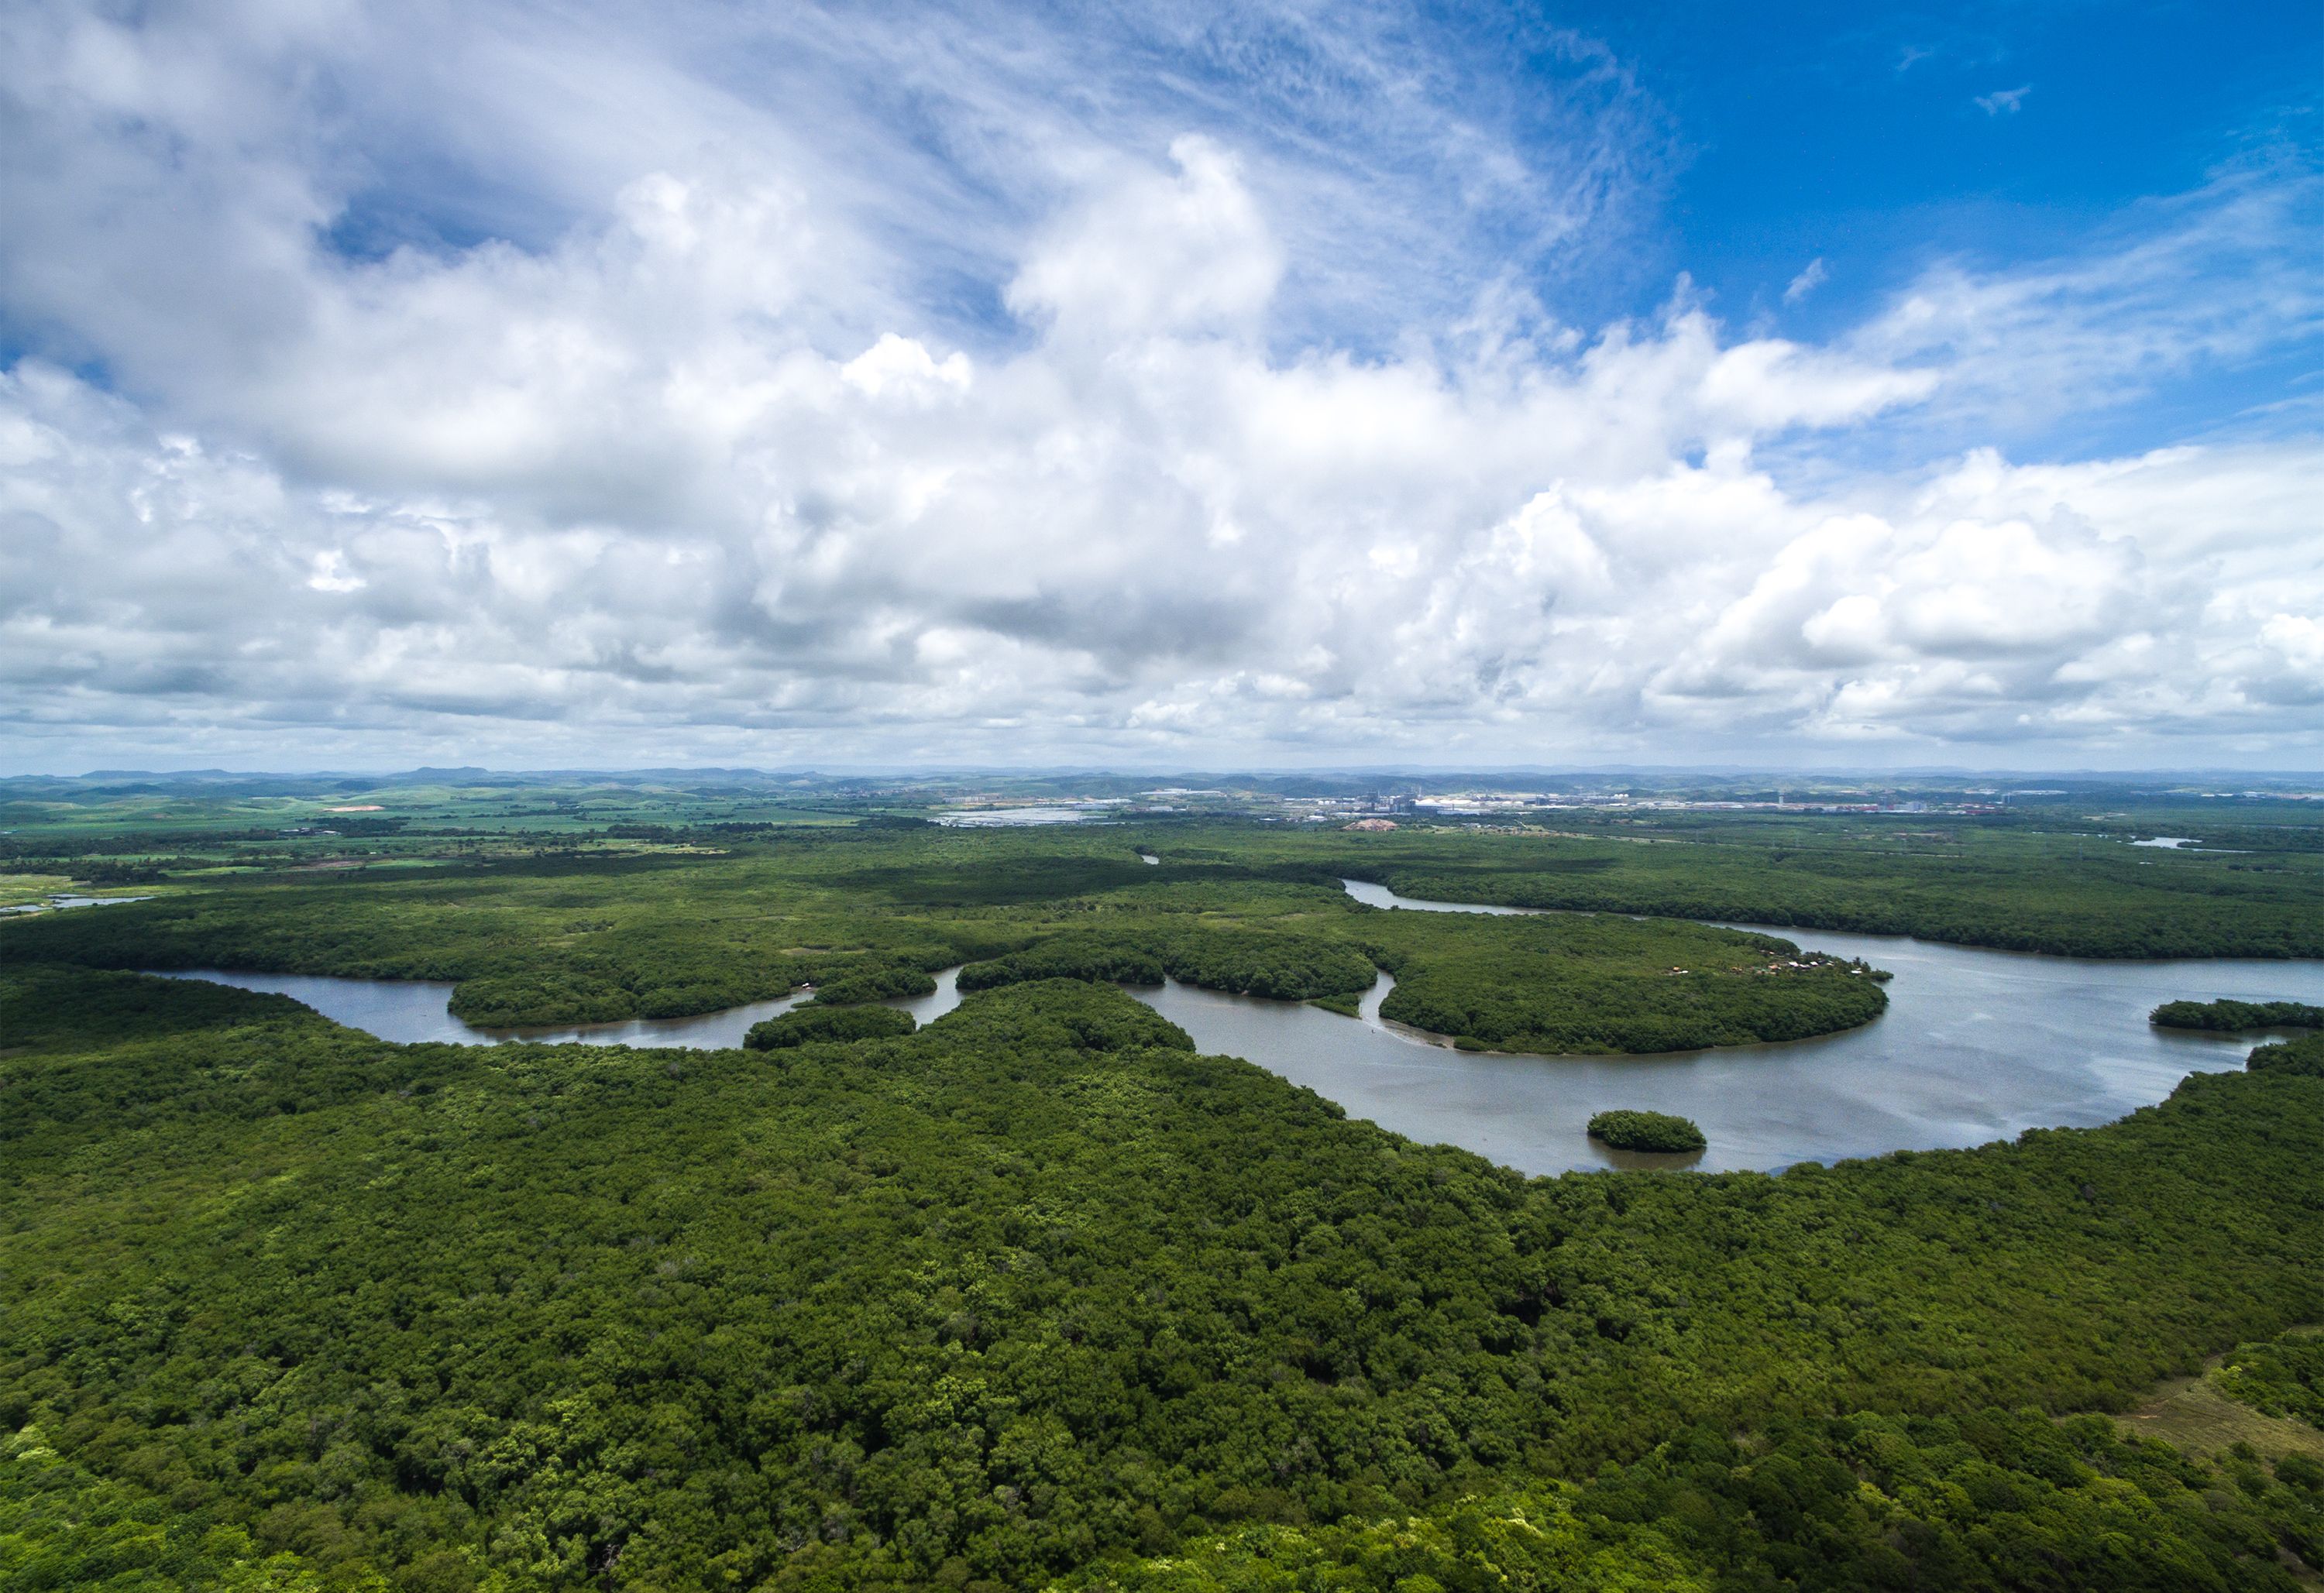 Aerial shot of the Amazon Rainforest in Brazil. Image by Gustavo Frazao/Shutterstock. Brazil, undated.